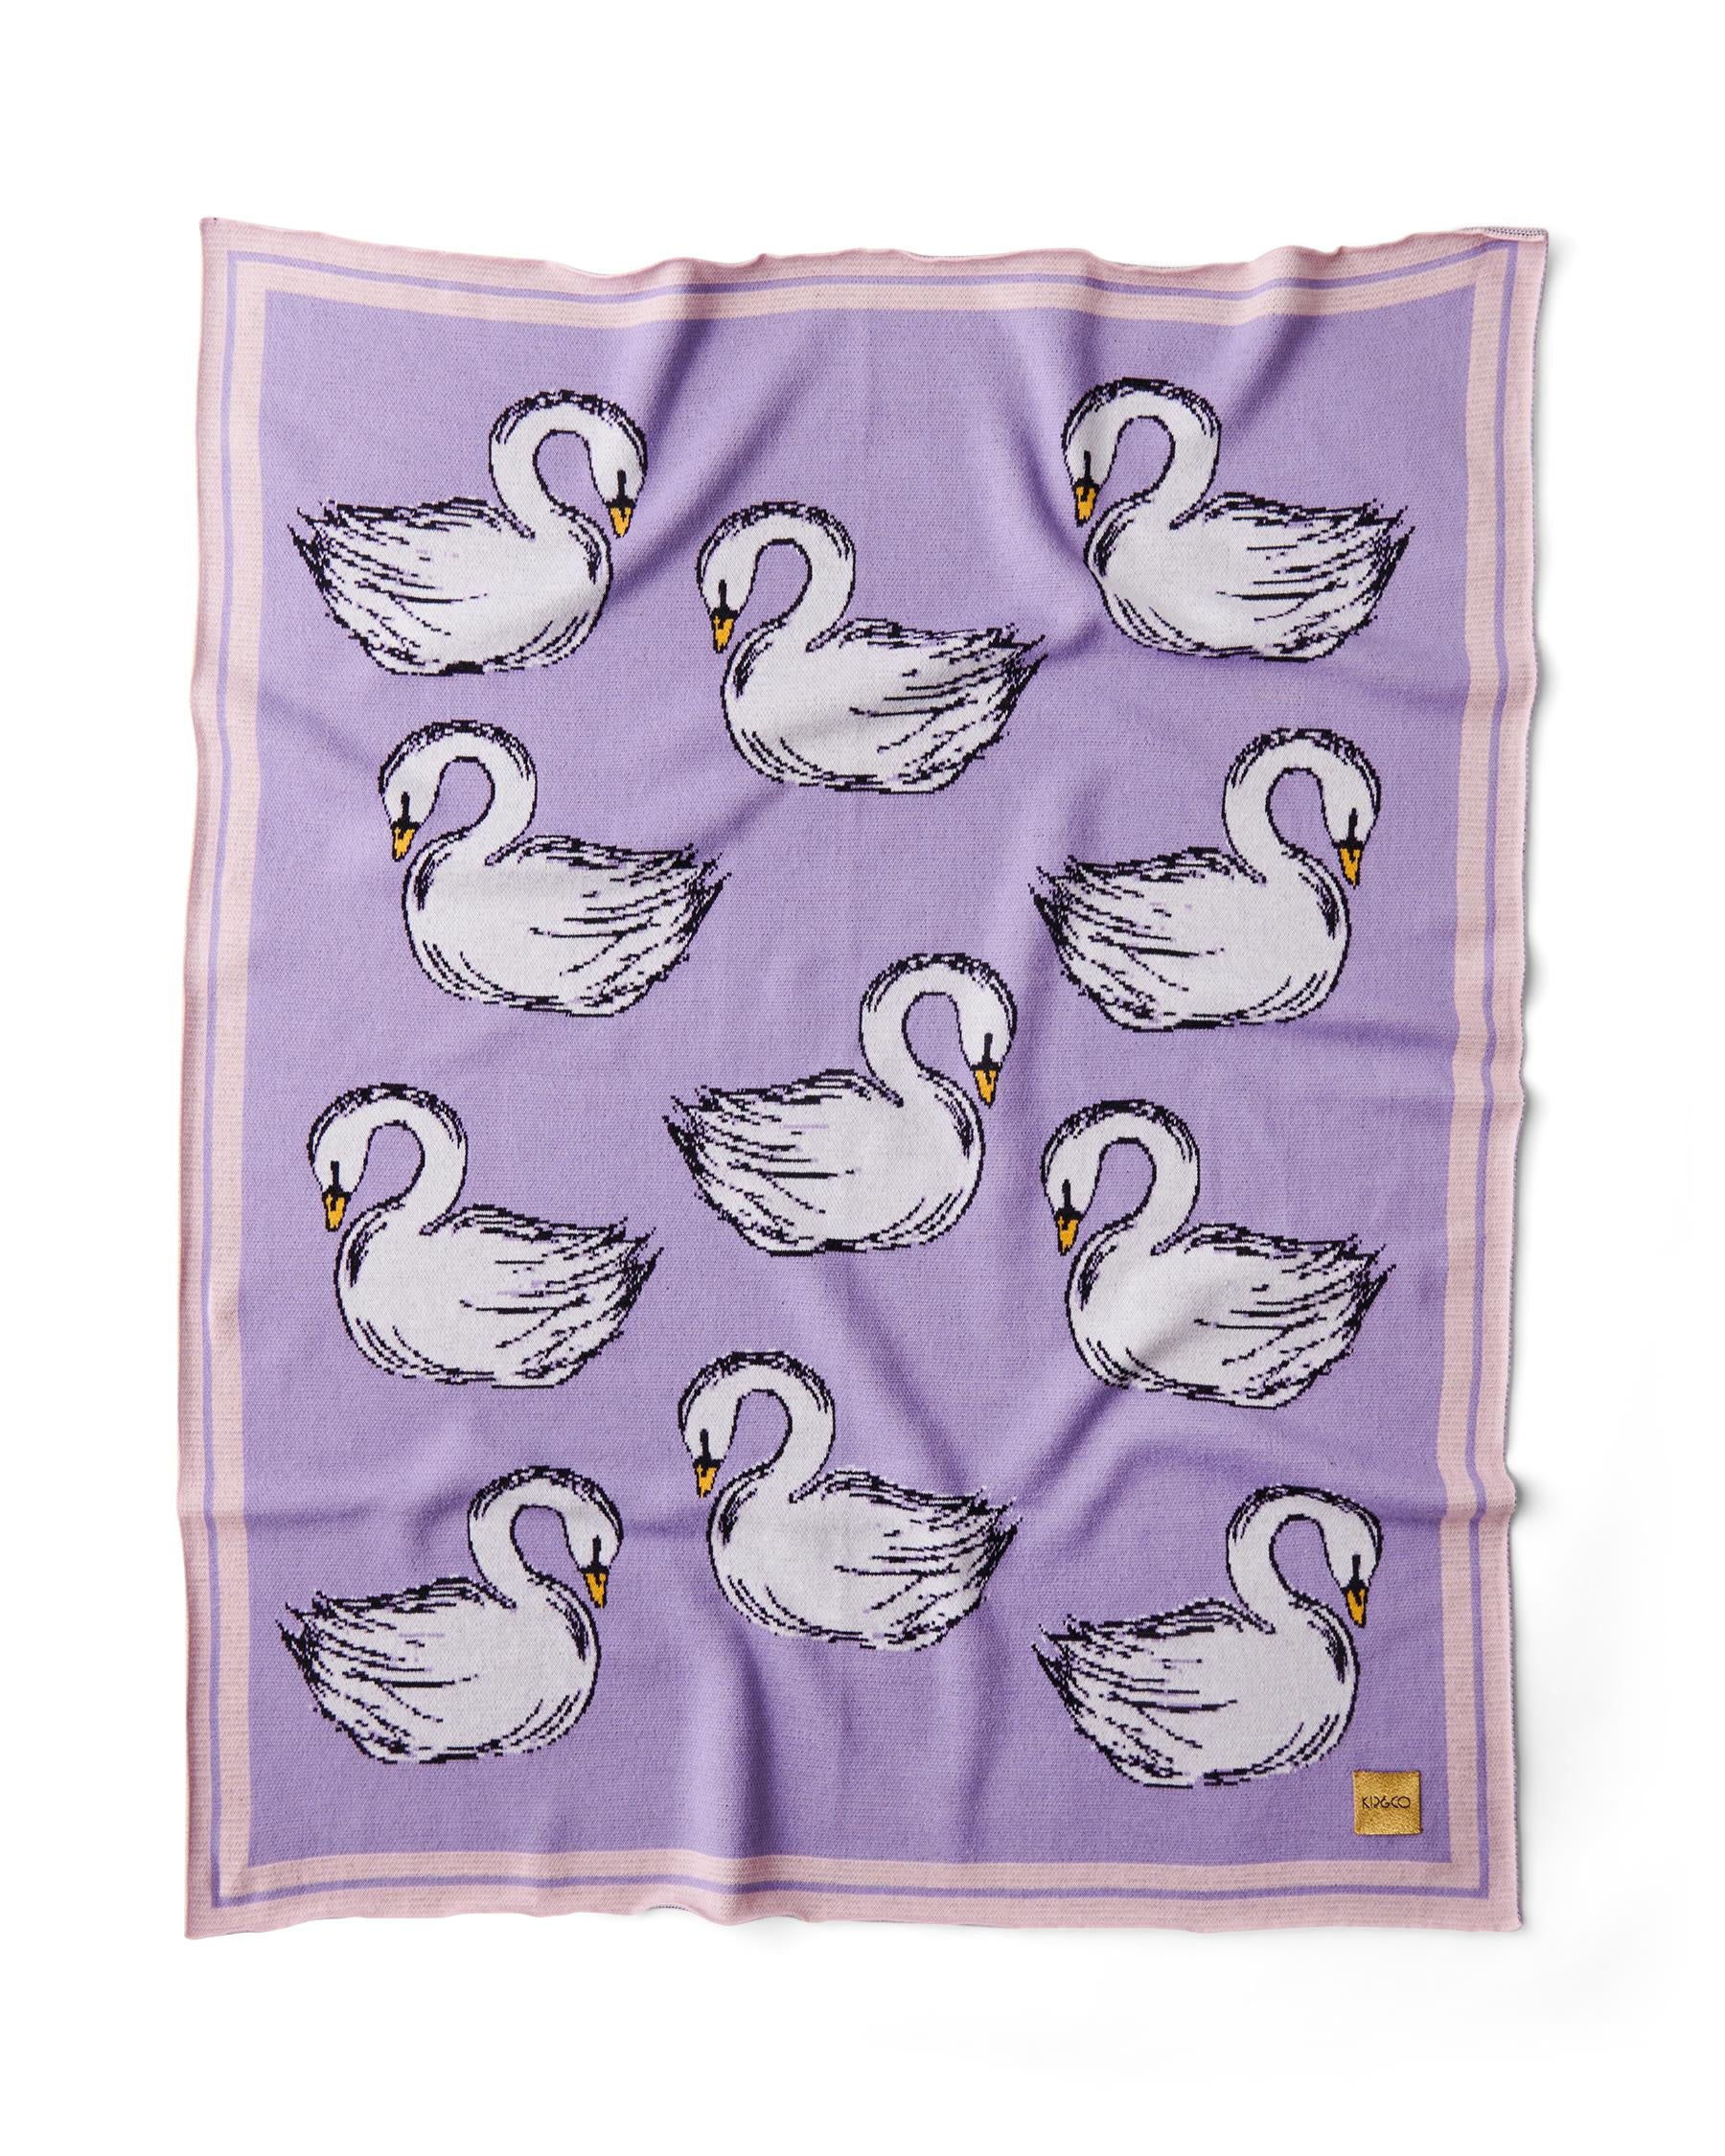 Knitted Blanket - Swan Lake